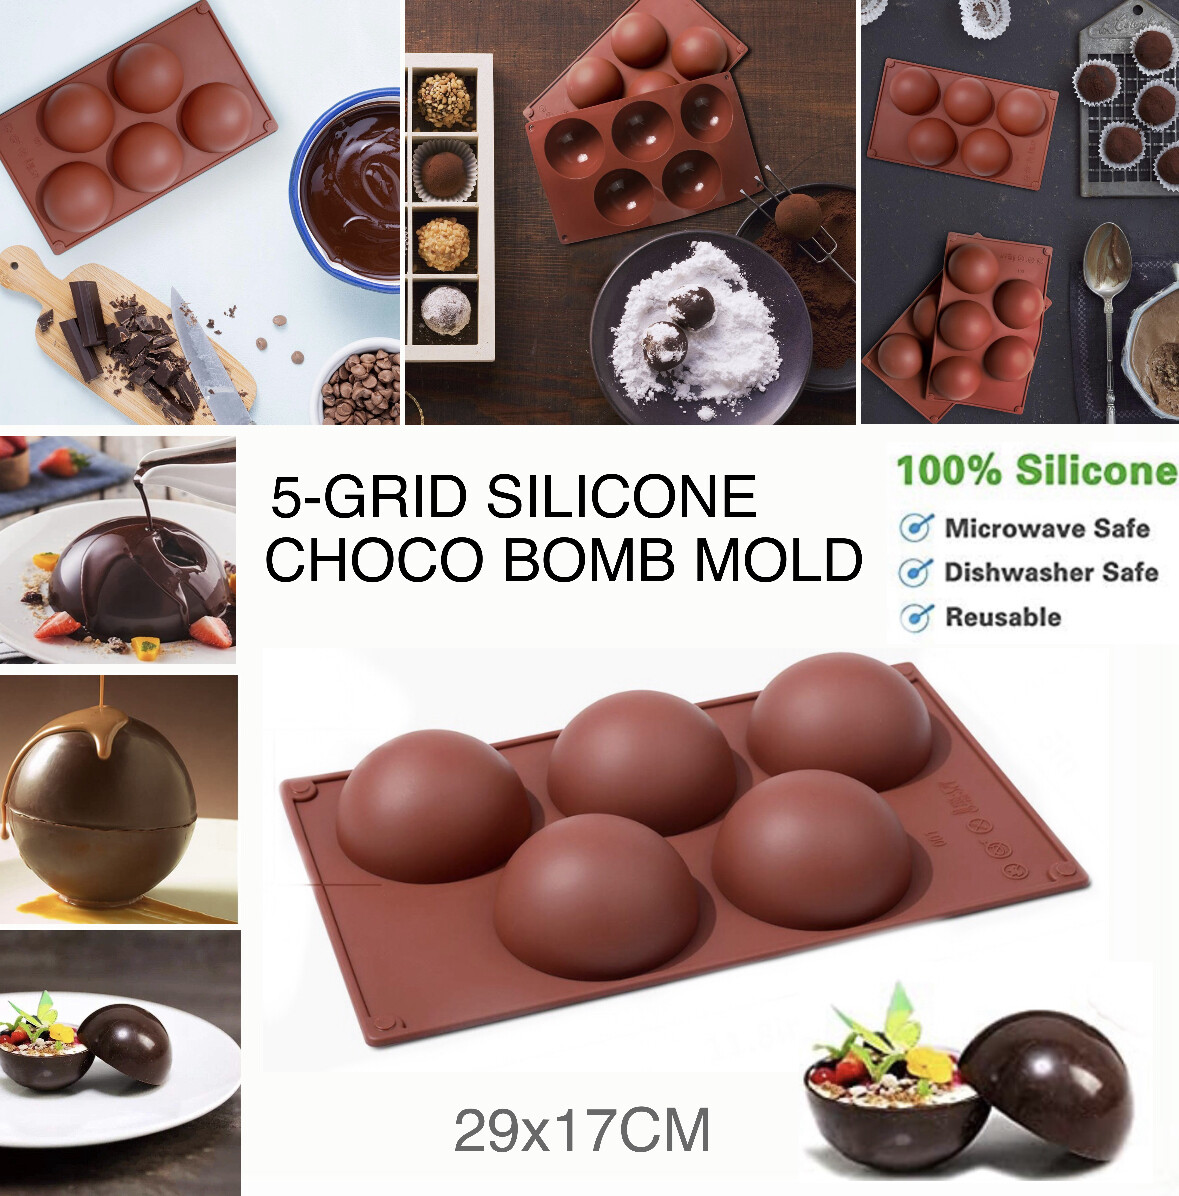 Choco Bomb Mold